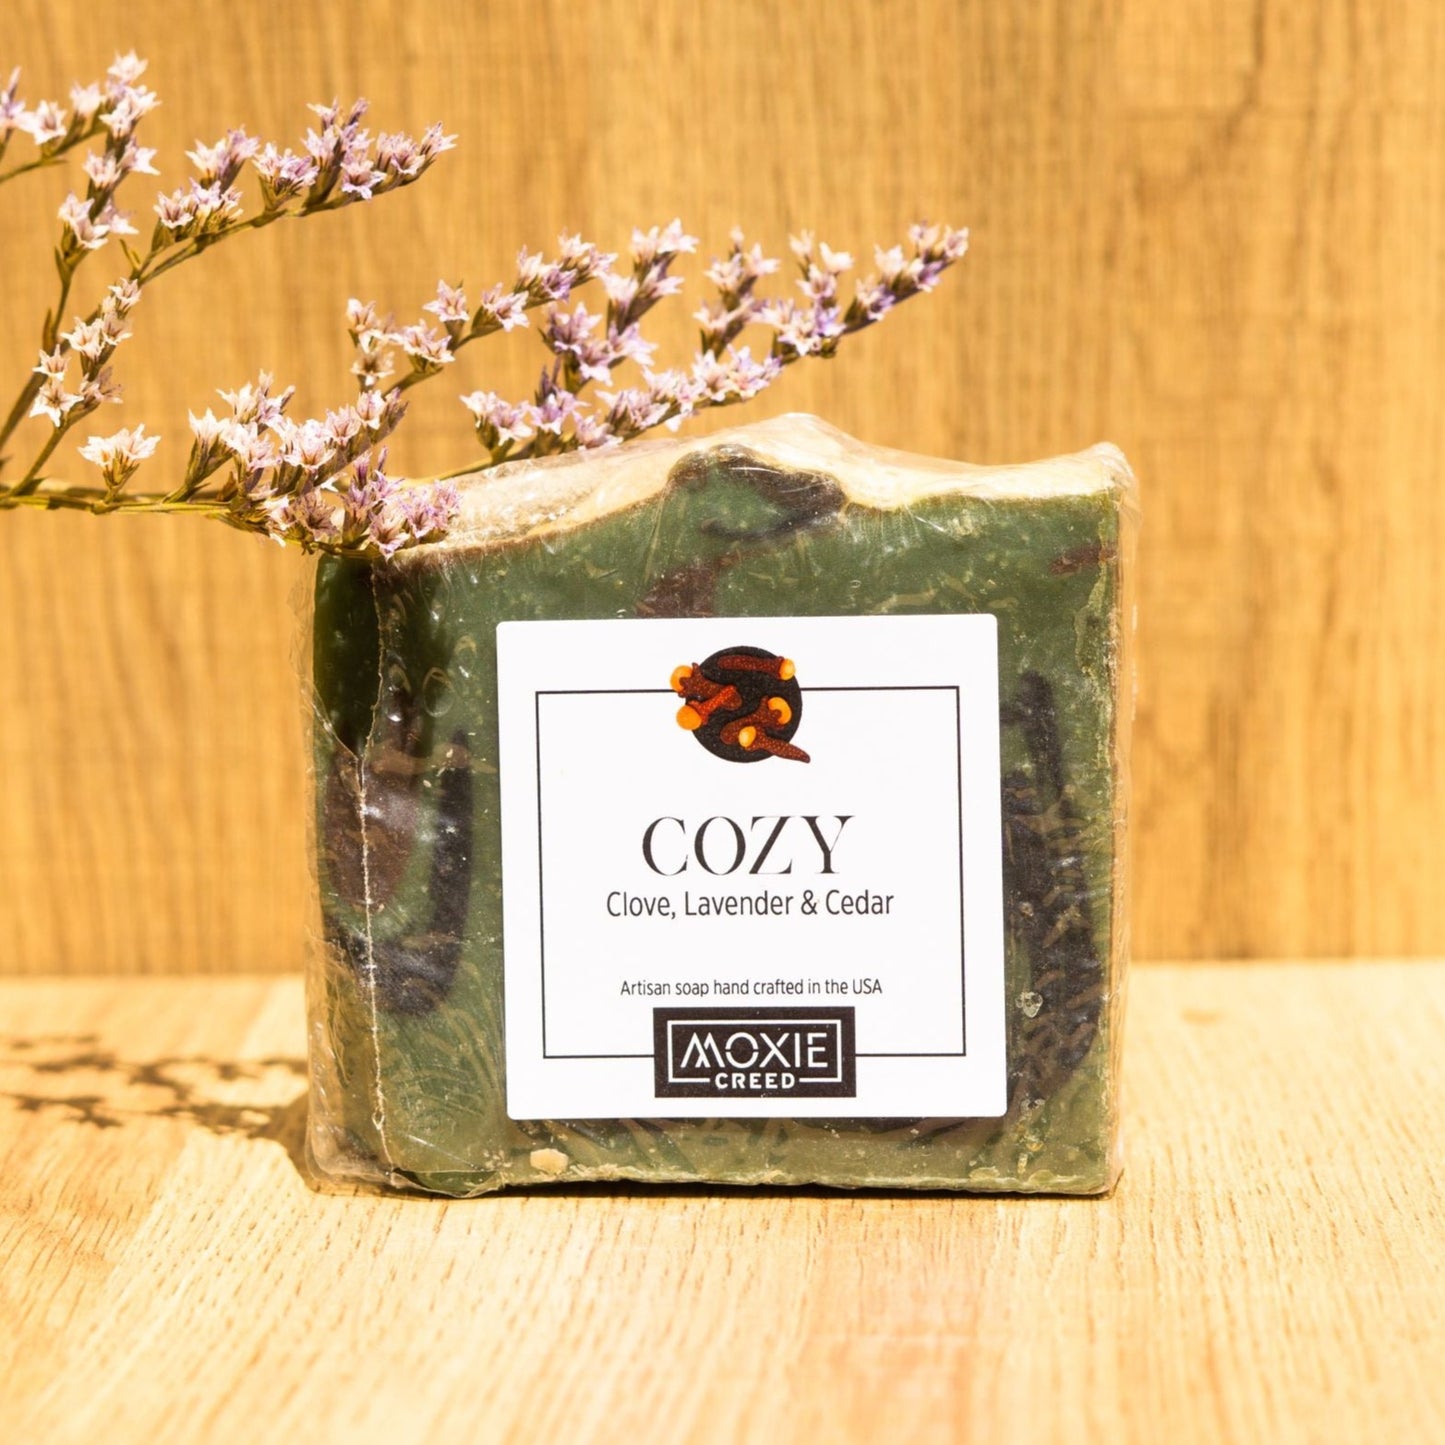 COZY Olive Oil Soap - Clove, Lavender & Cedar